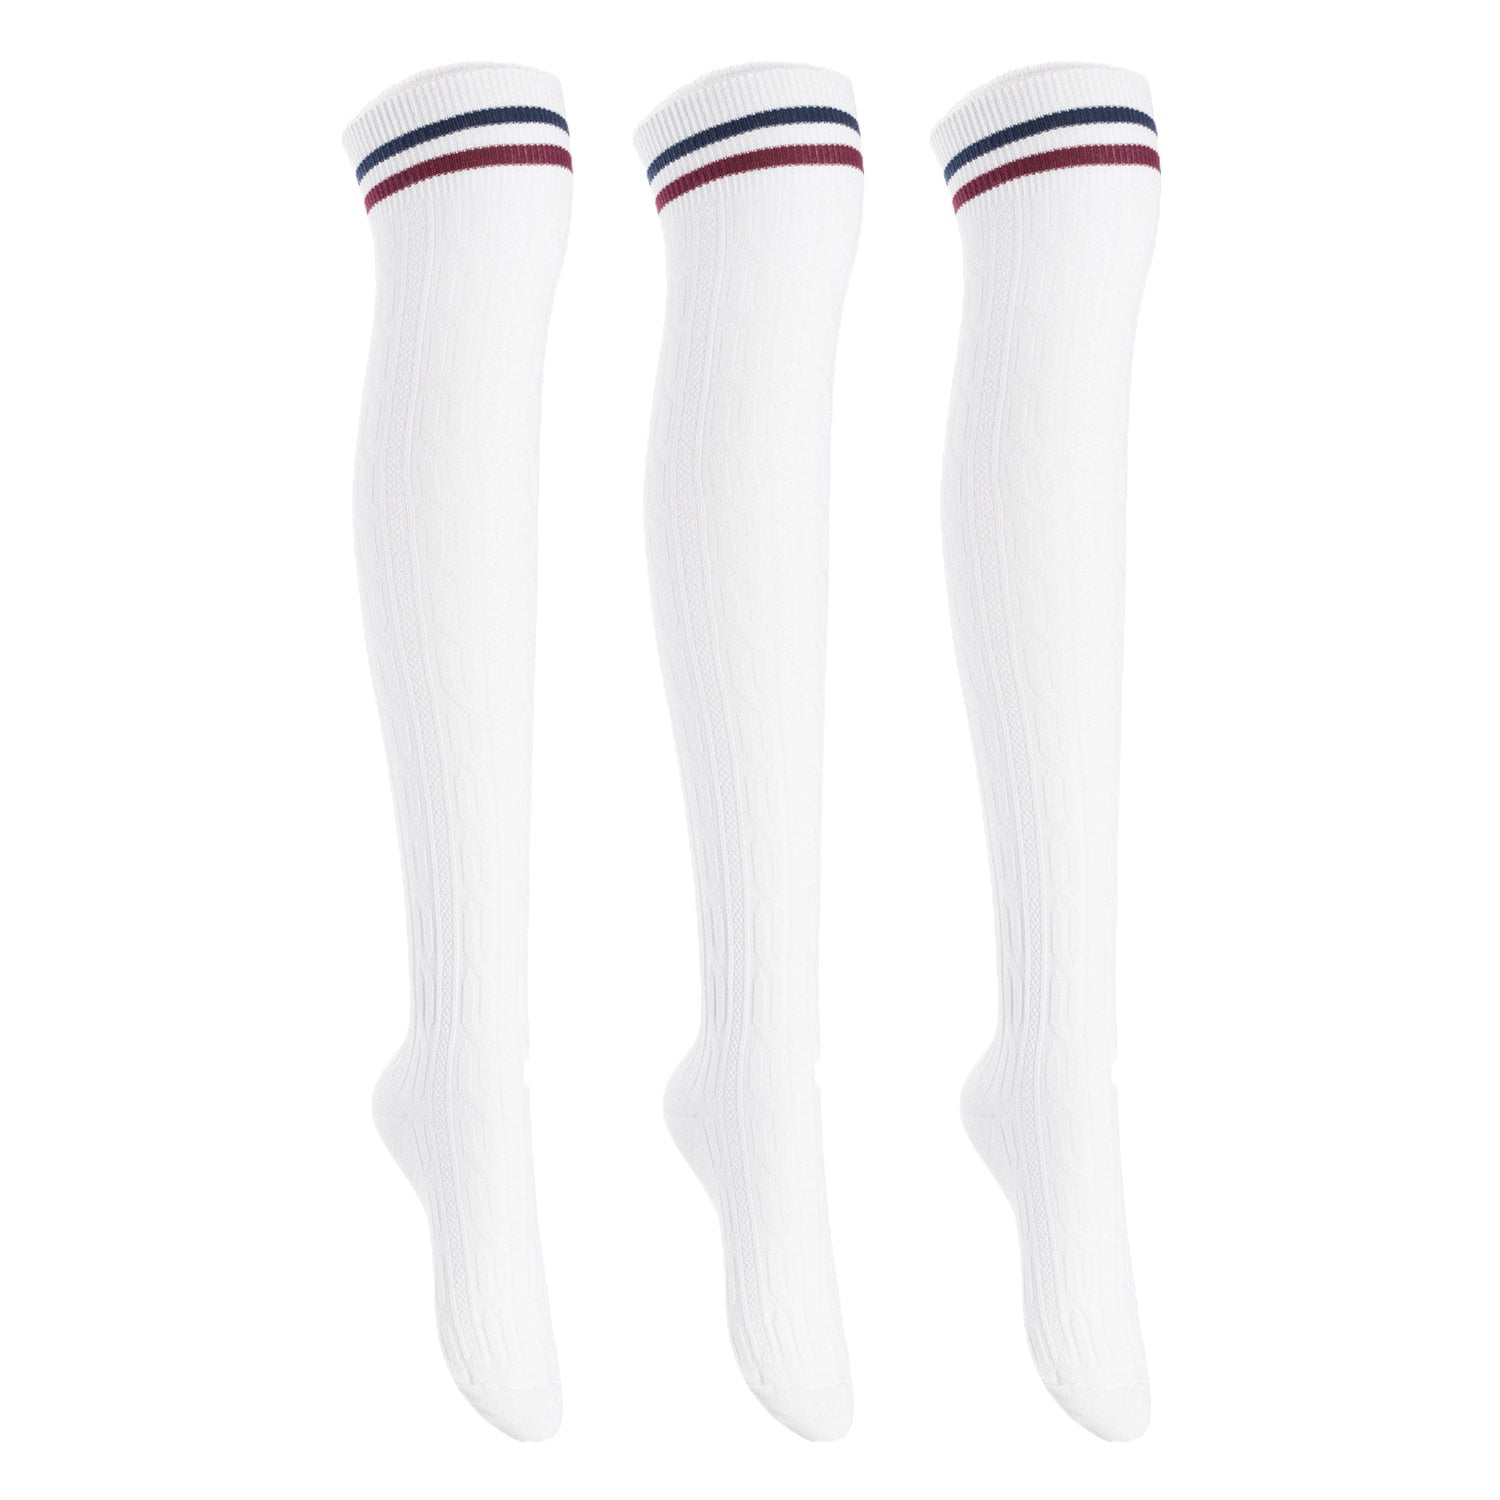 Unisex Knee High Fit Soccer Hockey Rugby Sports Training Socks UK Size 7-12 Comfort-Style School Uniform Plain Football Socks